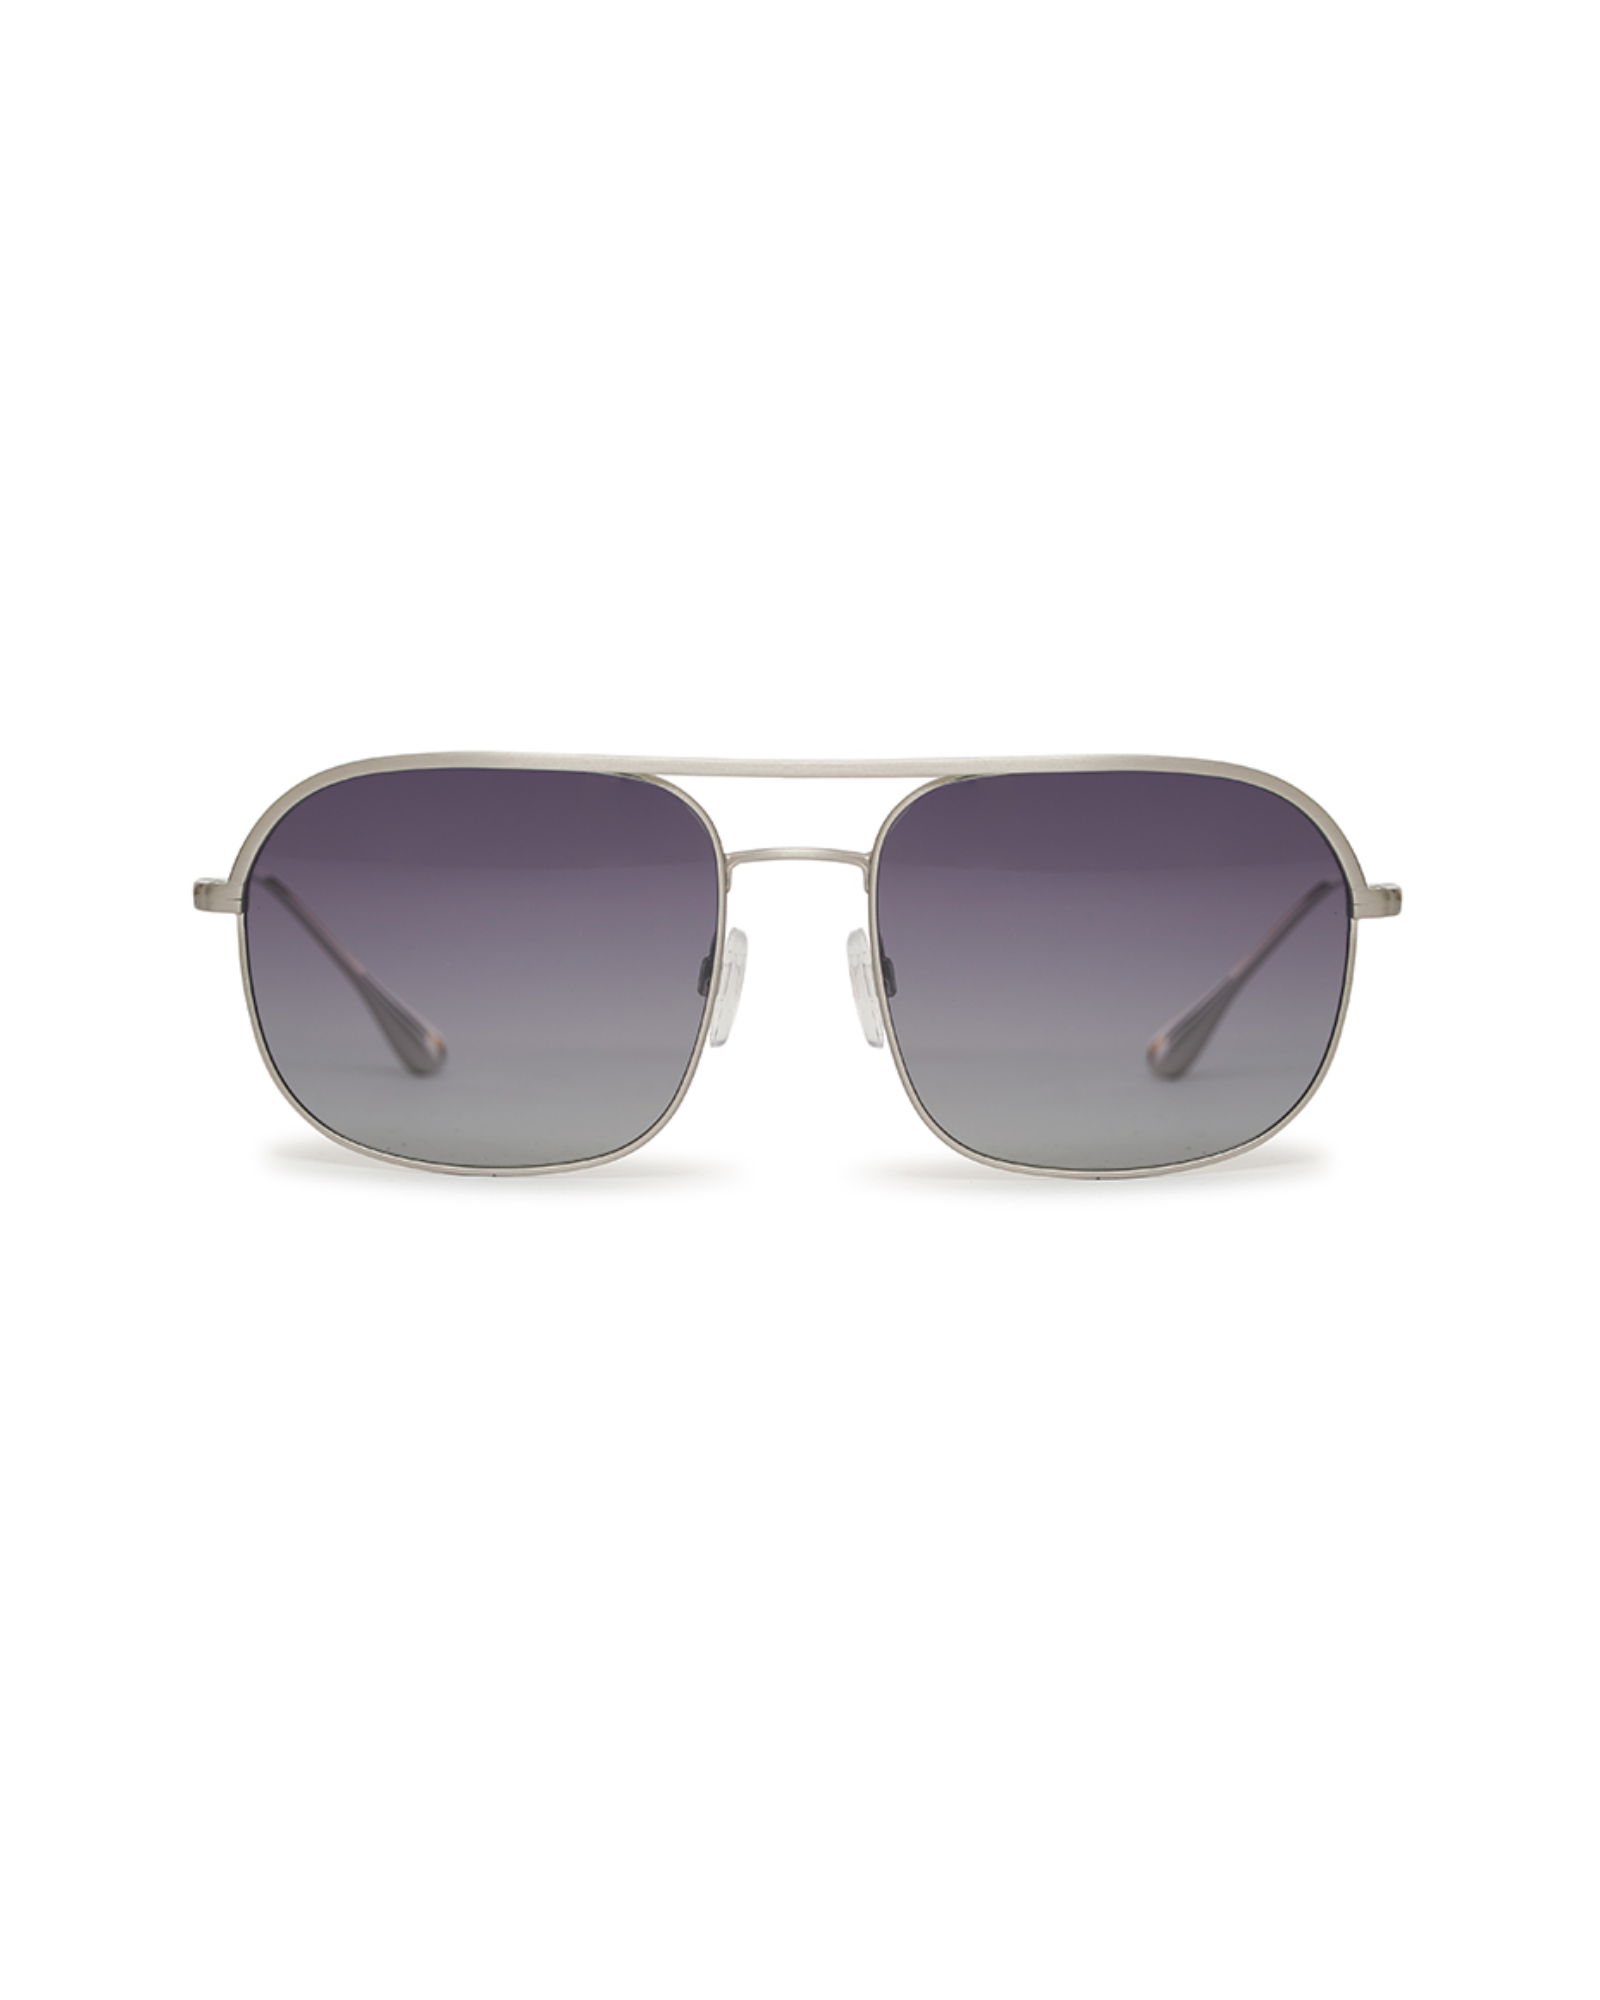 Anine Bing Highland Sunglasses in Silver